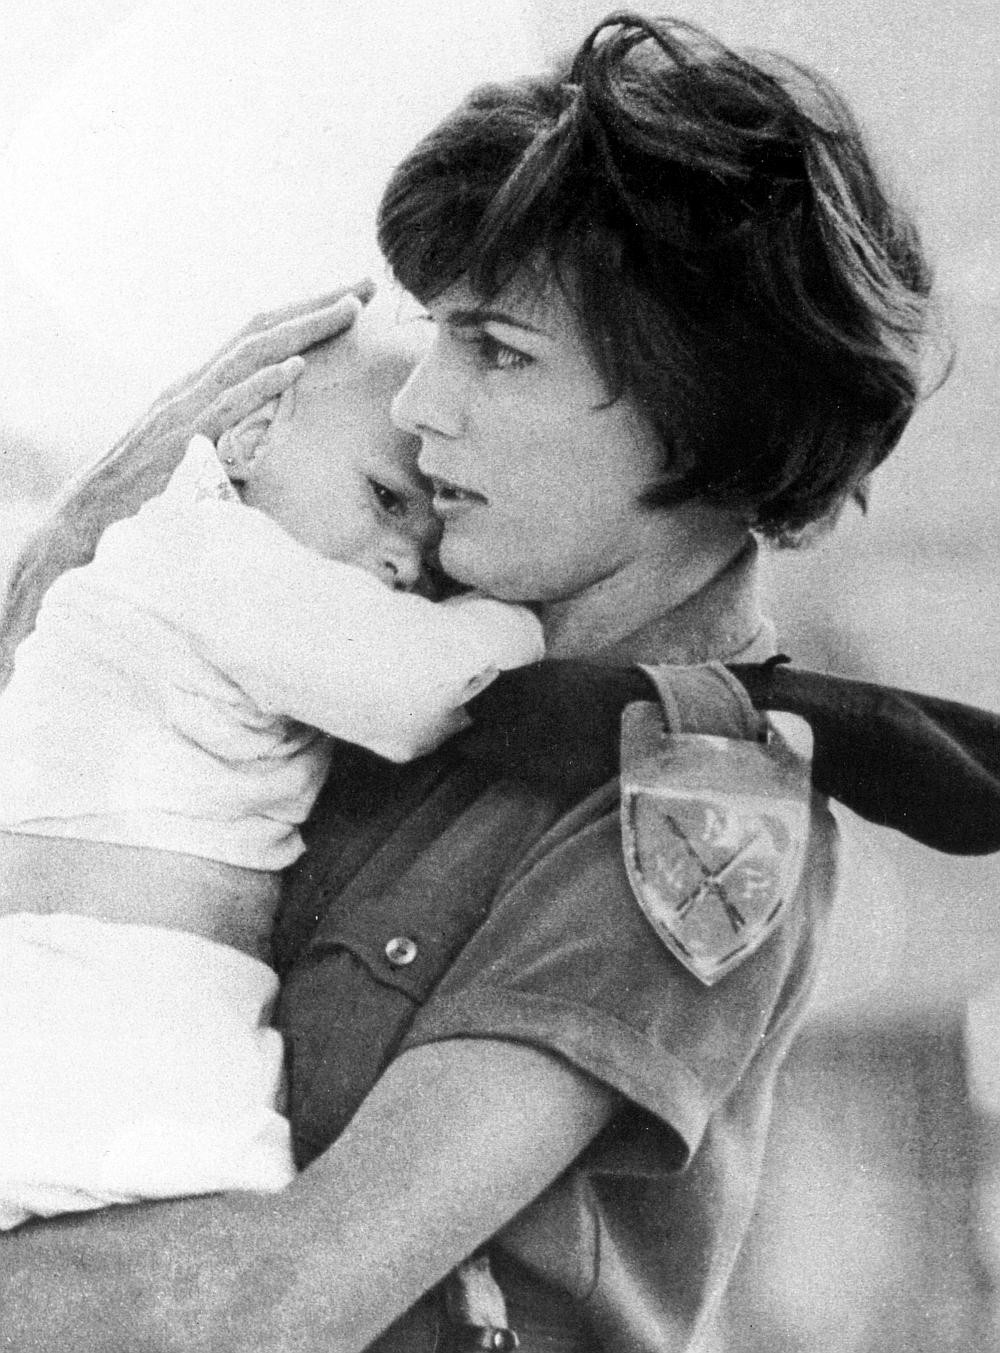 Milizionärin mit Kind, 1960